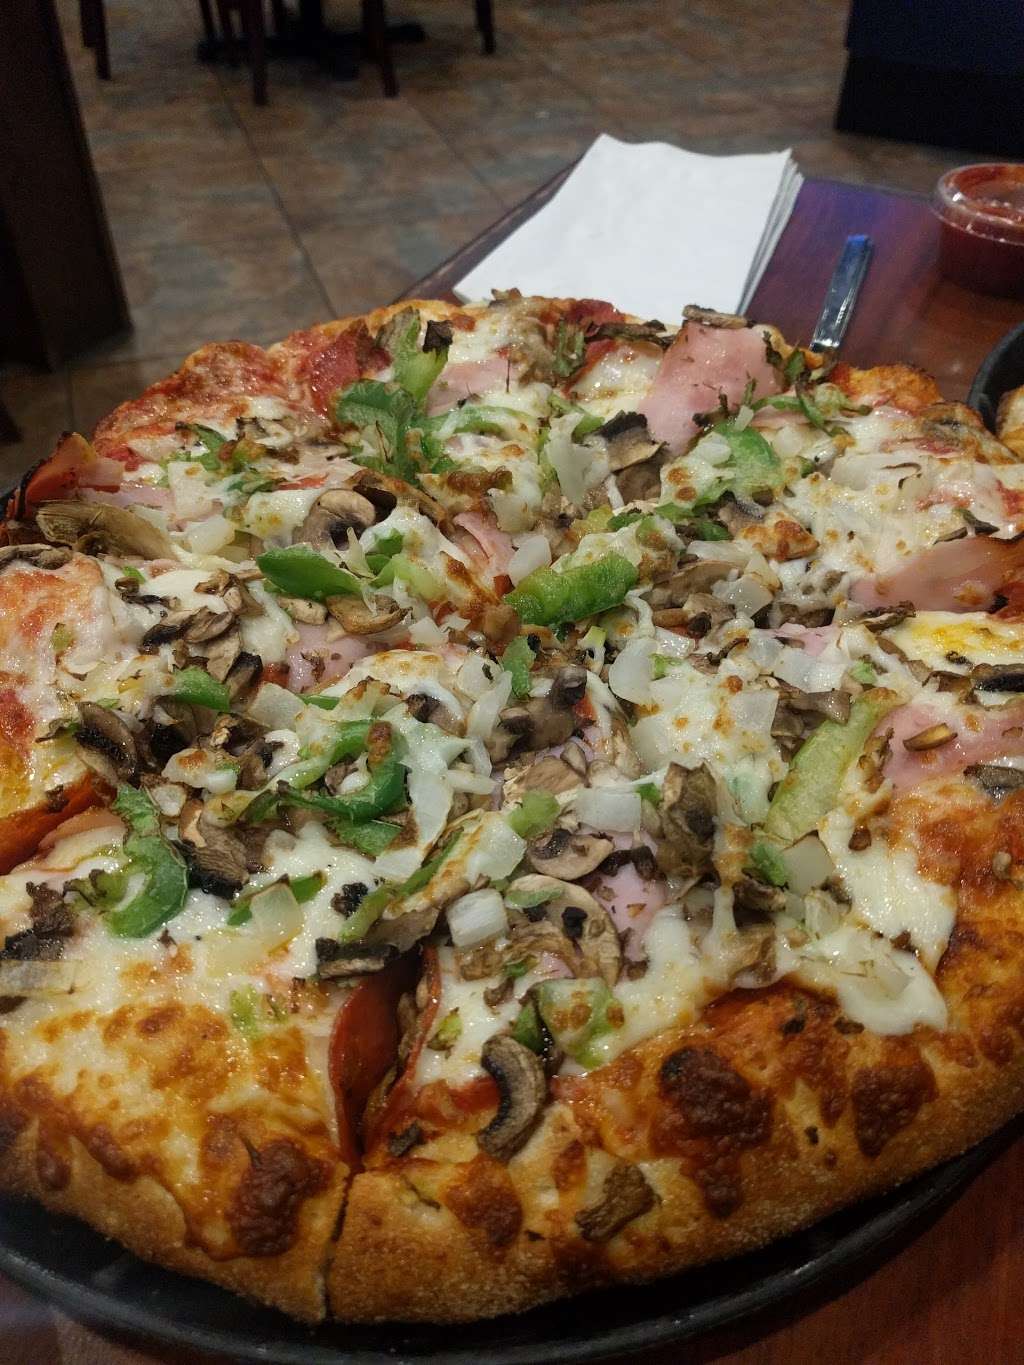 Barros Pizza | 4625 E Ray Rd, Phoenix, AZ 85048, USA | Phone: (480) 759-4400